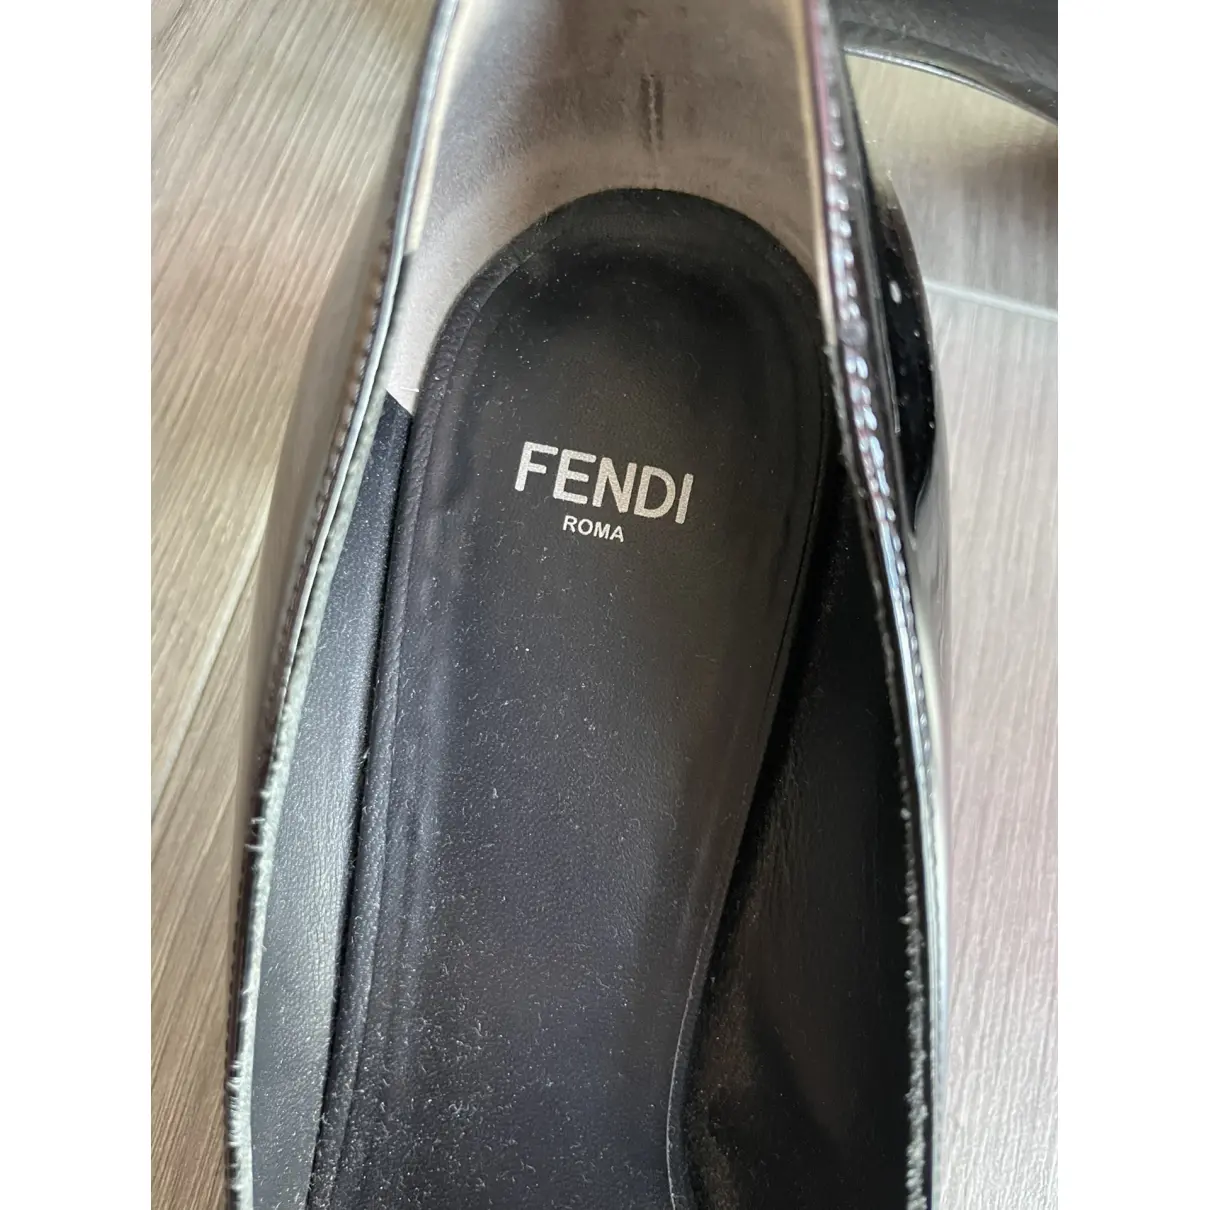 Buy Fendi Leather ballet flats online